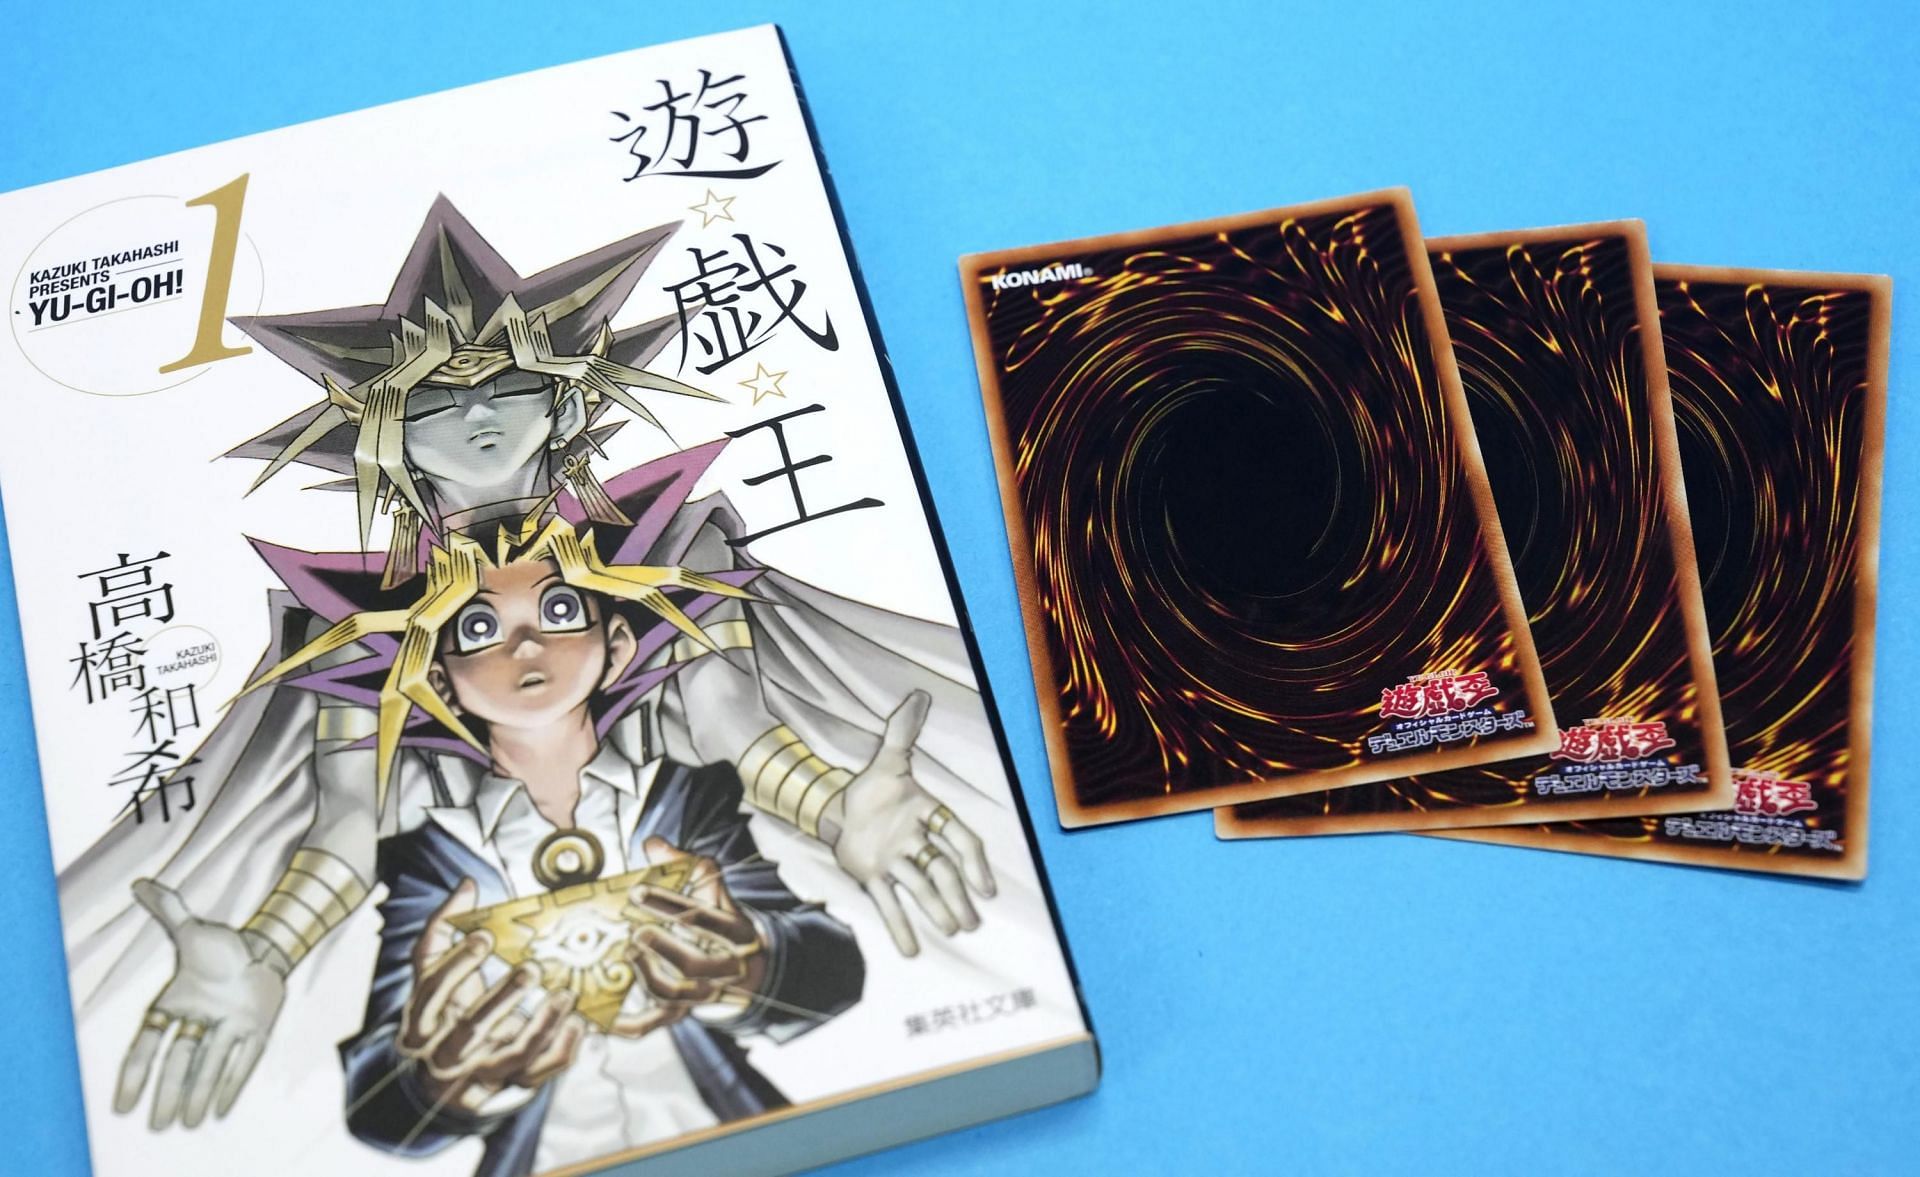 Yu-Gi-Oh manga volume 1 and cards (Image via Viz Media)